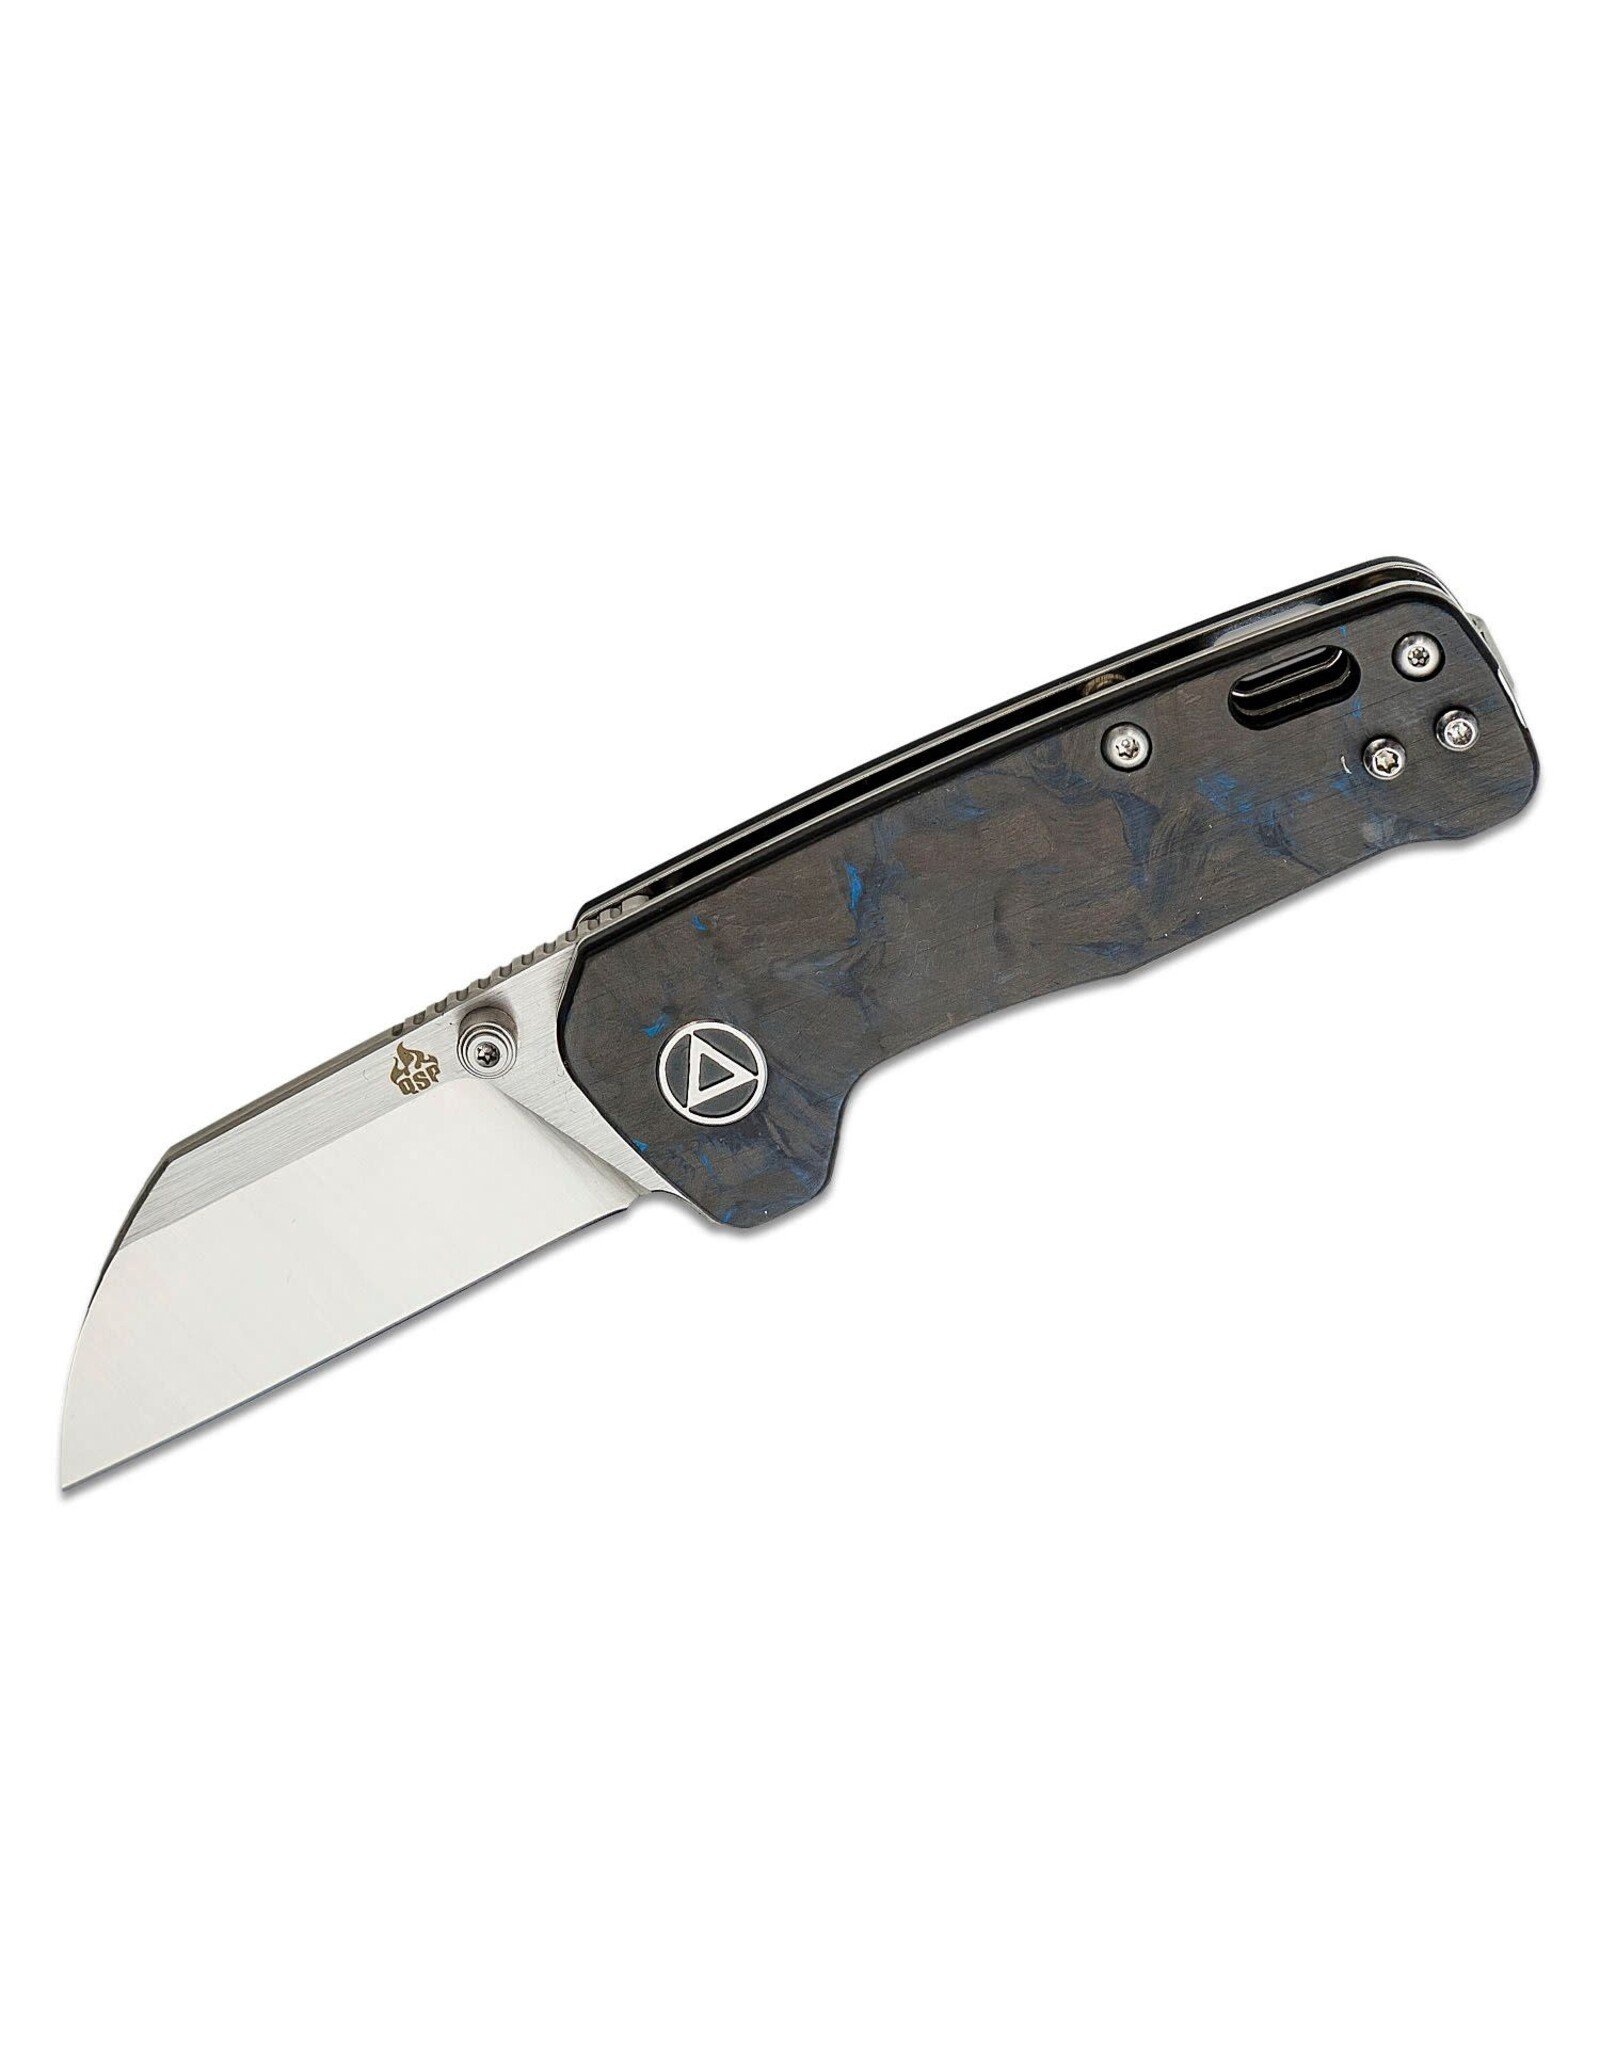 QSP QSP Knives Penguin Mini Folding Knife 2.25" 14C28N Two-Tone Satin Sheepsfoot Blade, Blue Shredded Carbon Fiber Handles, Liner Lock - QS130XS-D1